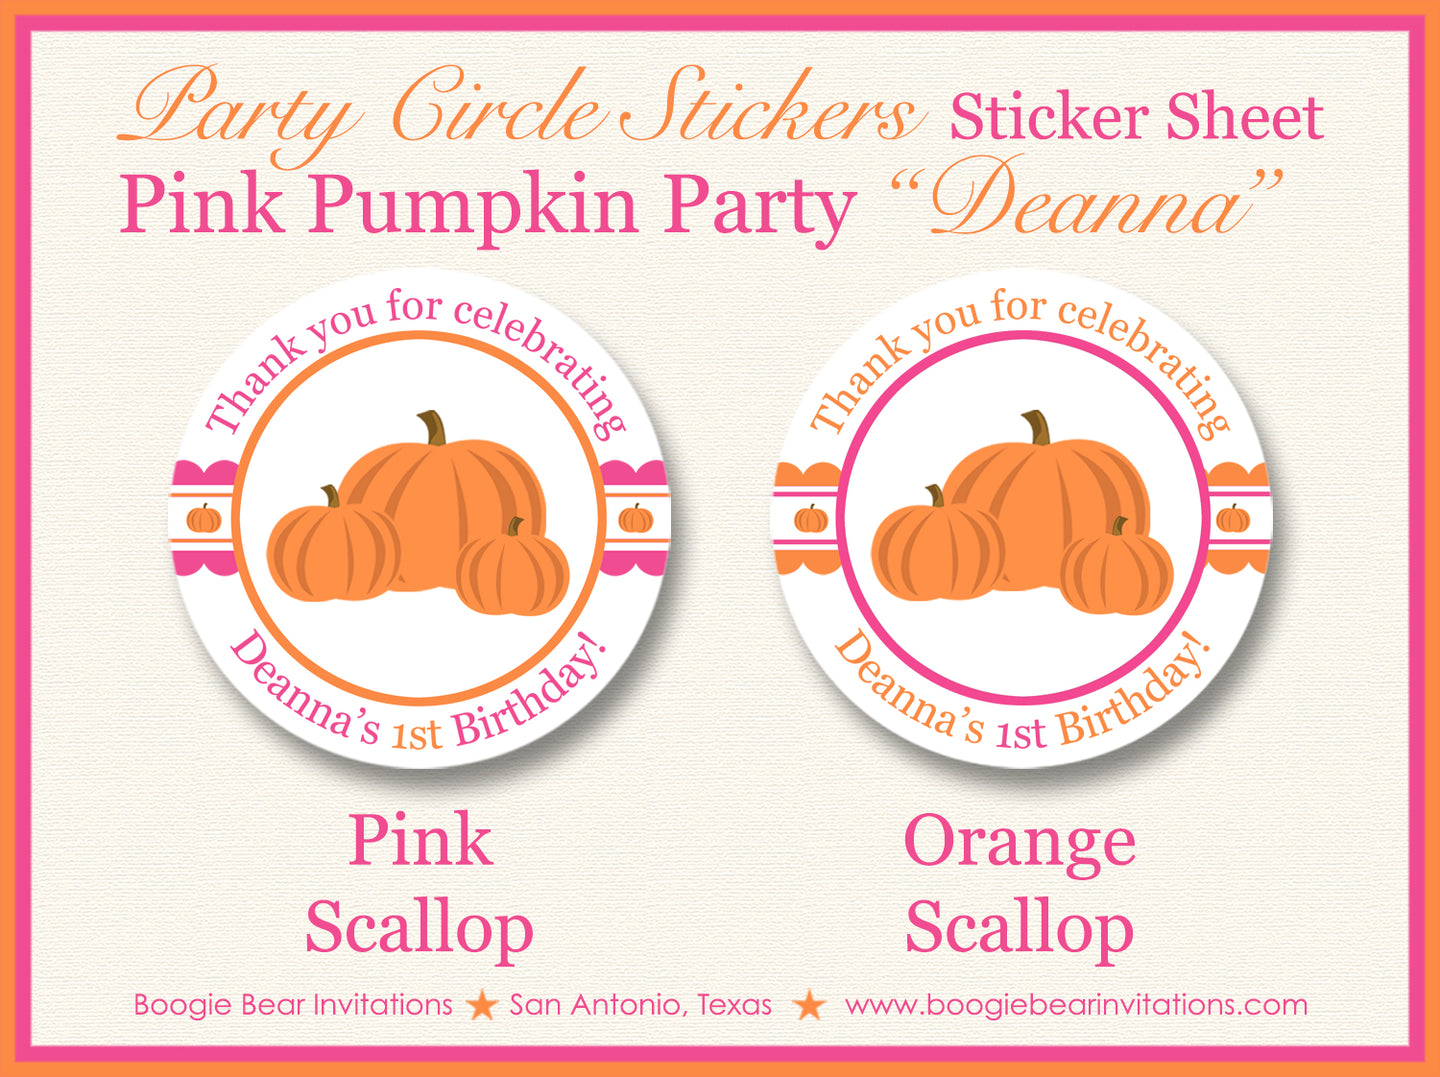 Pink Pumpkin Birthday Party Stickers Circle Sheet Round Circle Tag Girl Boogie Bear Invitations Deanna Theme